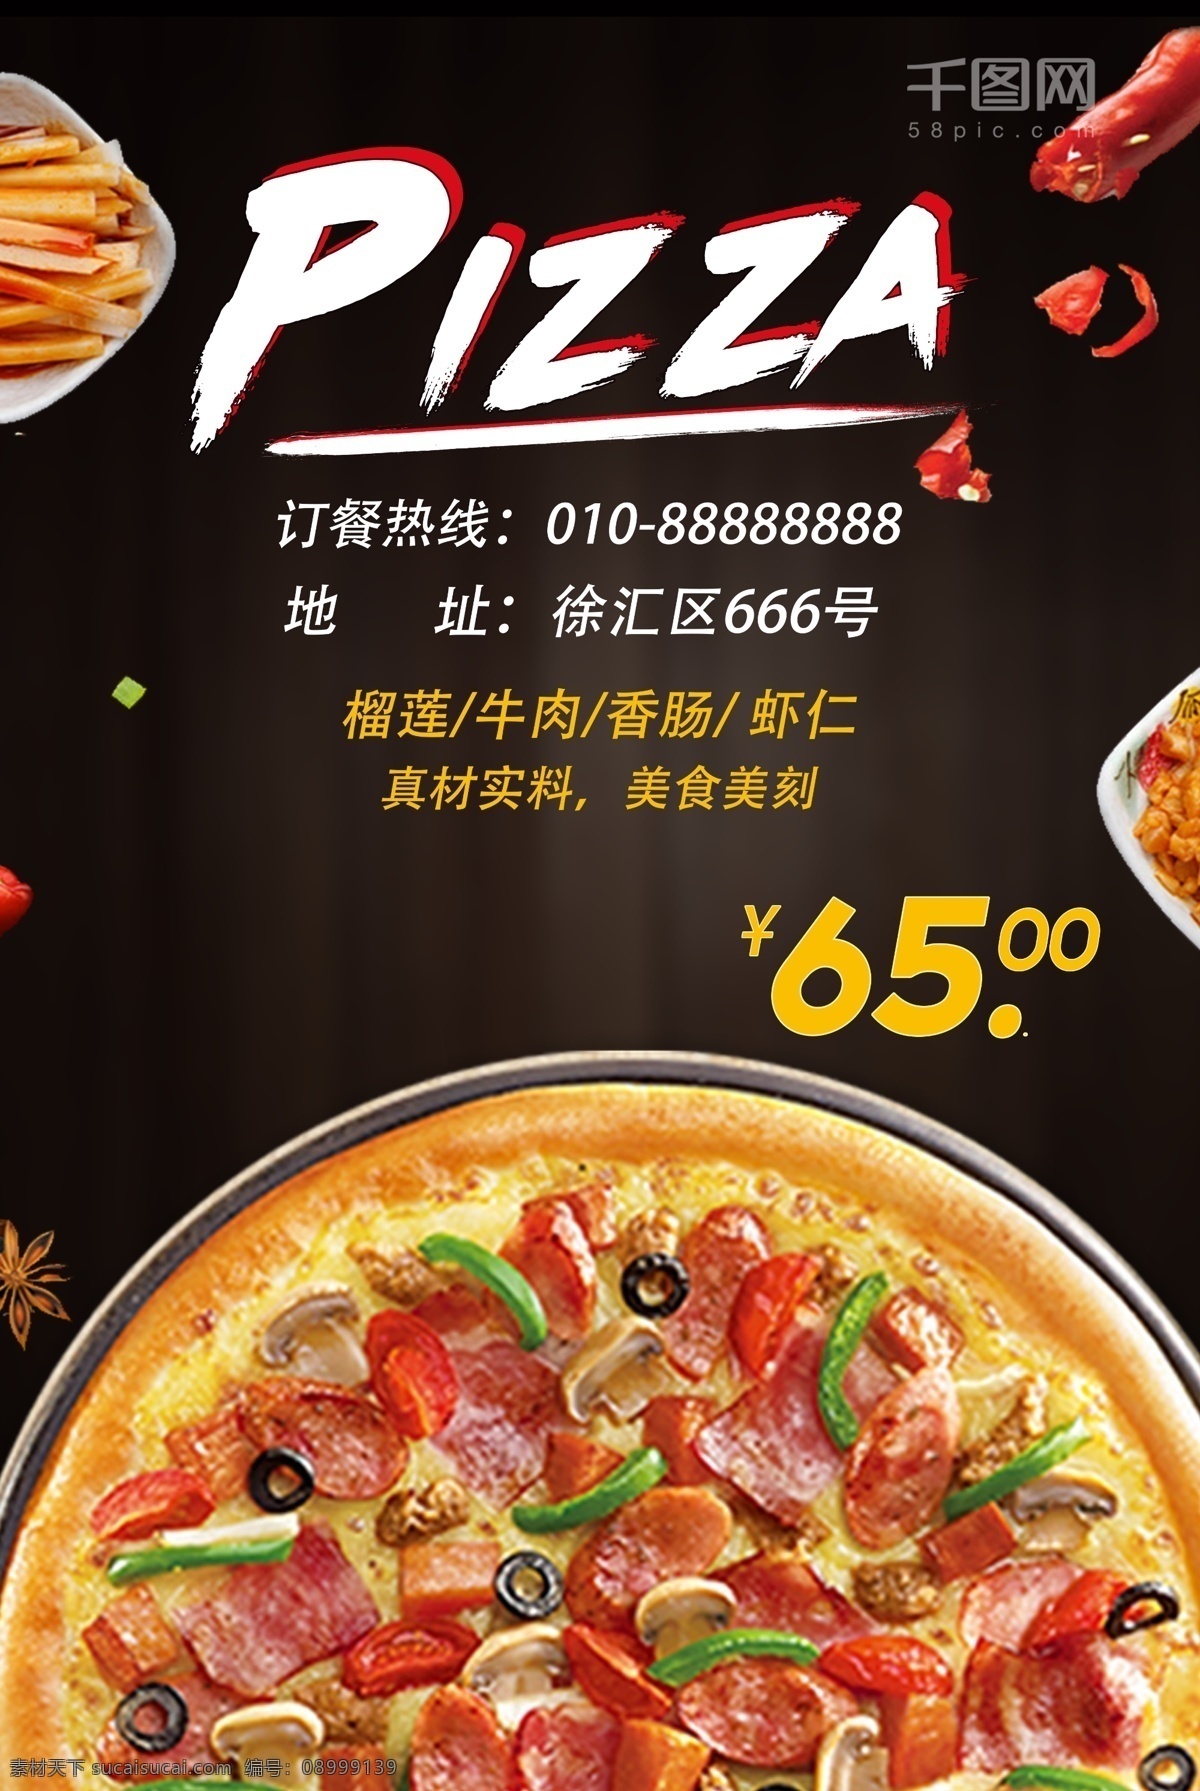 pizza 美味 美食 西餐 店 披萨 促销 创意 火腿披萨 餐厅 餐馆促销 价格